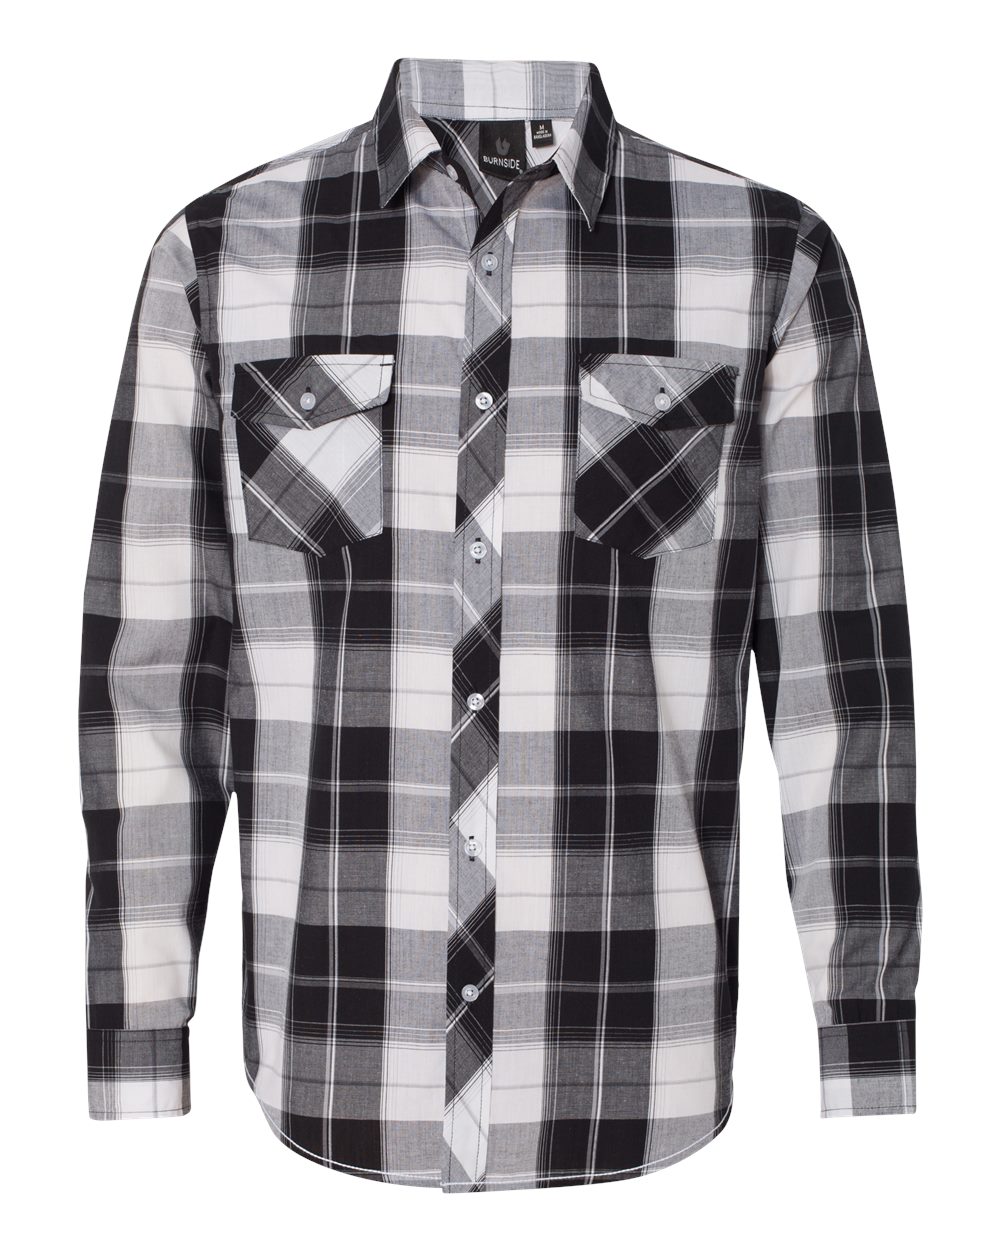 Burnside 8202 Drop Ship - Men's Long-Sleeve Plaid Pattern Woven Shirt